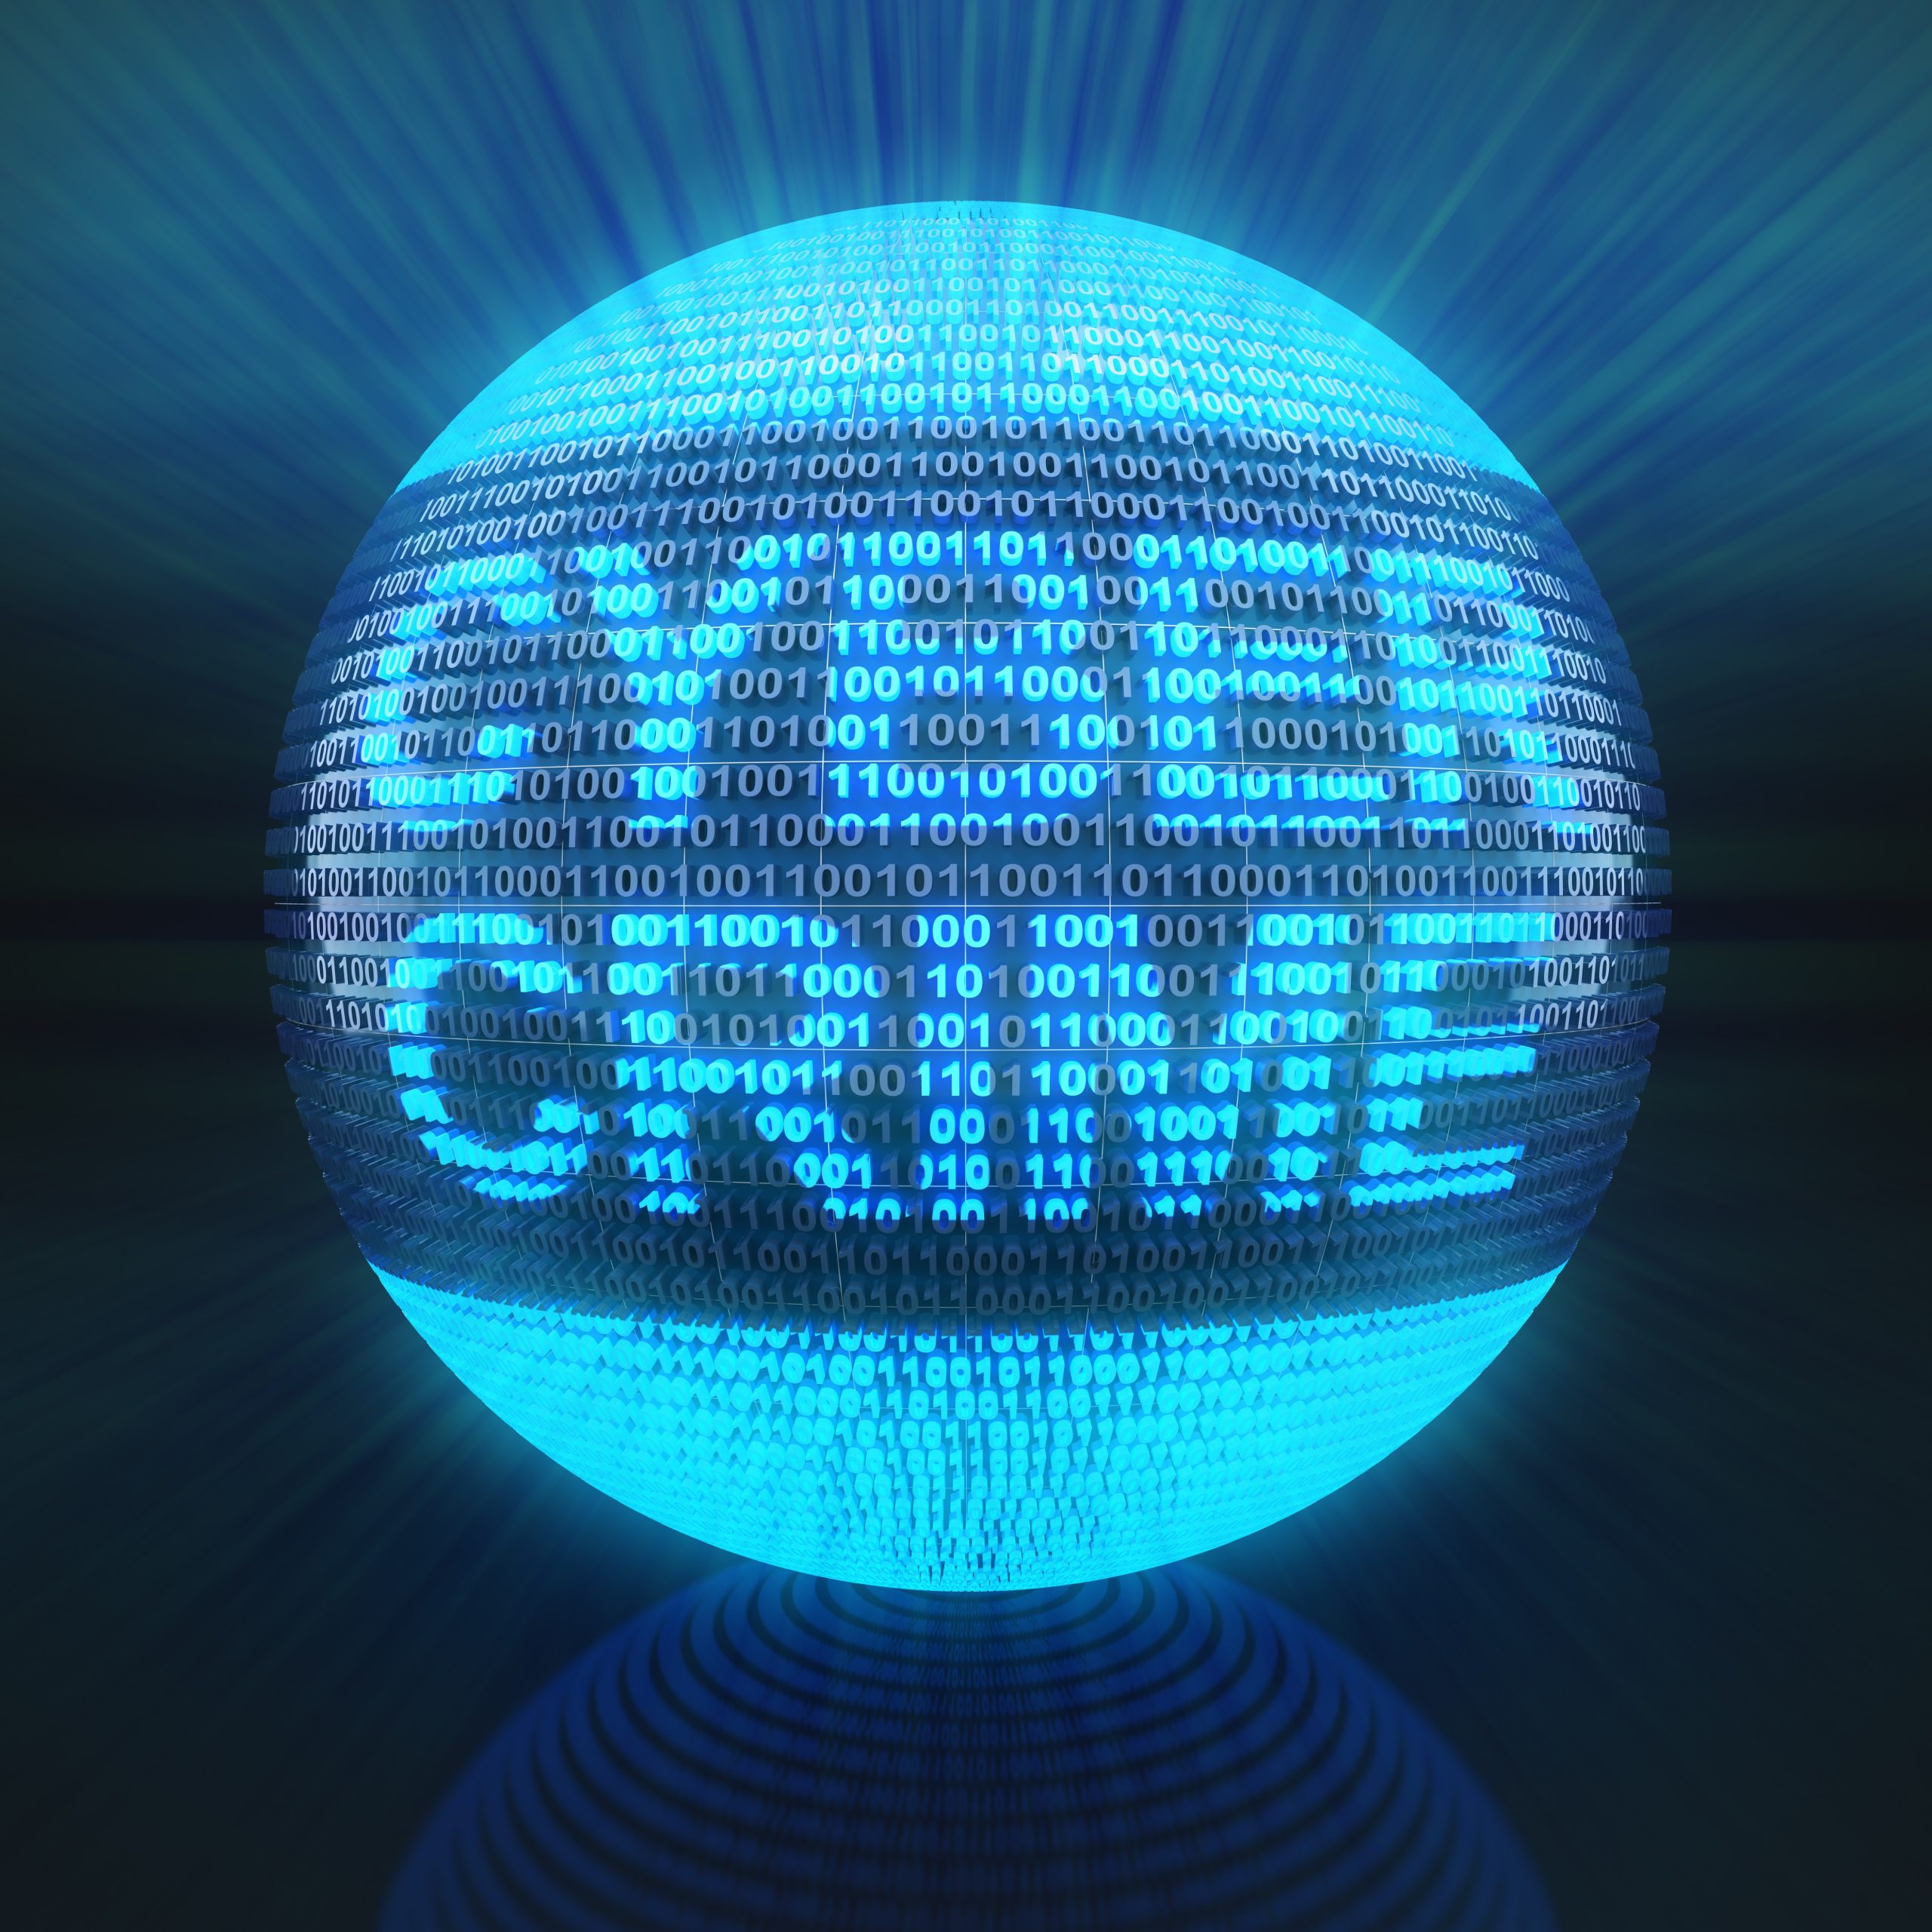 cybercrime